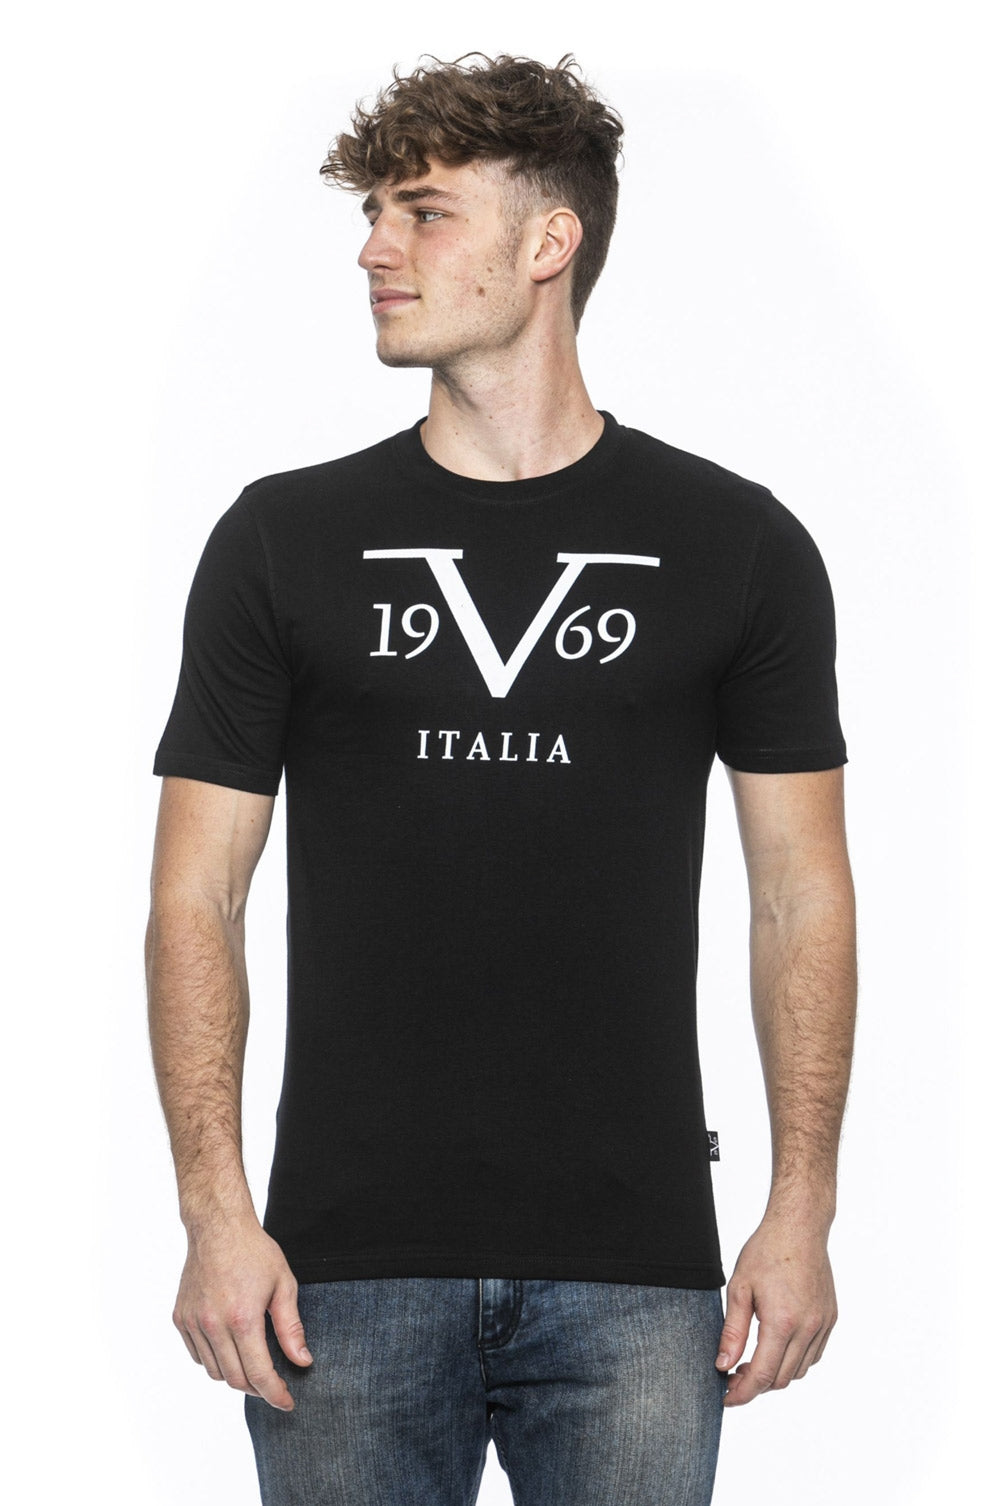 19V69 Italia Mens T-Shirt Black RAYAN BLACK